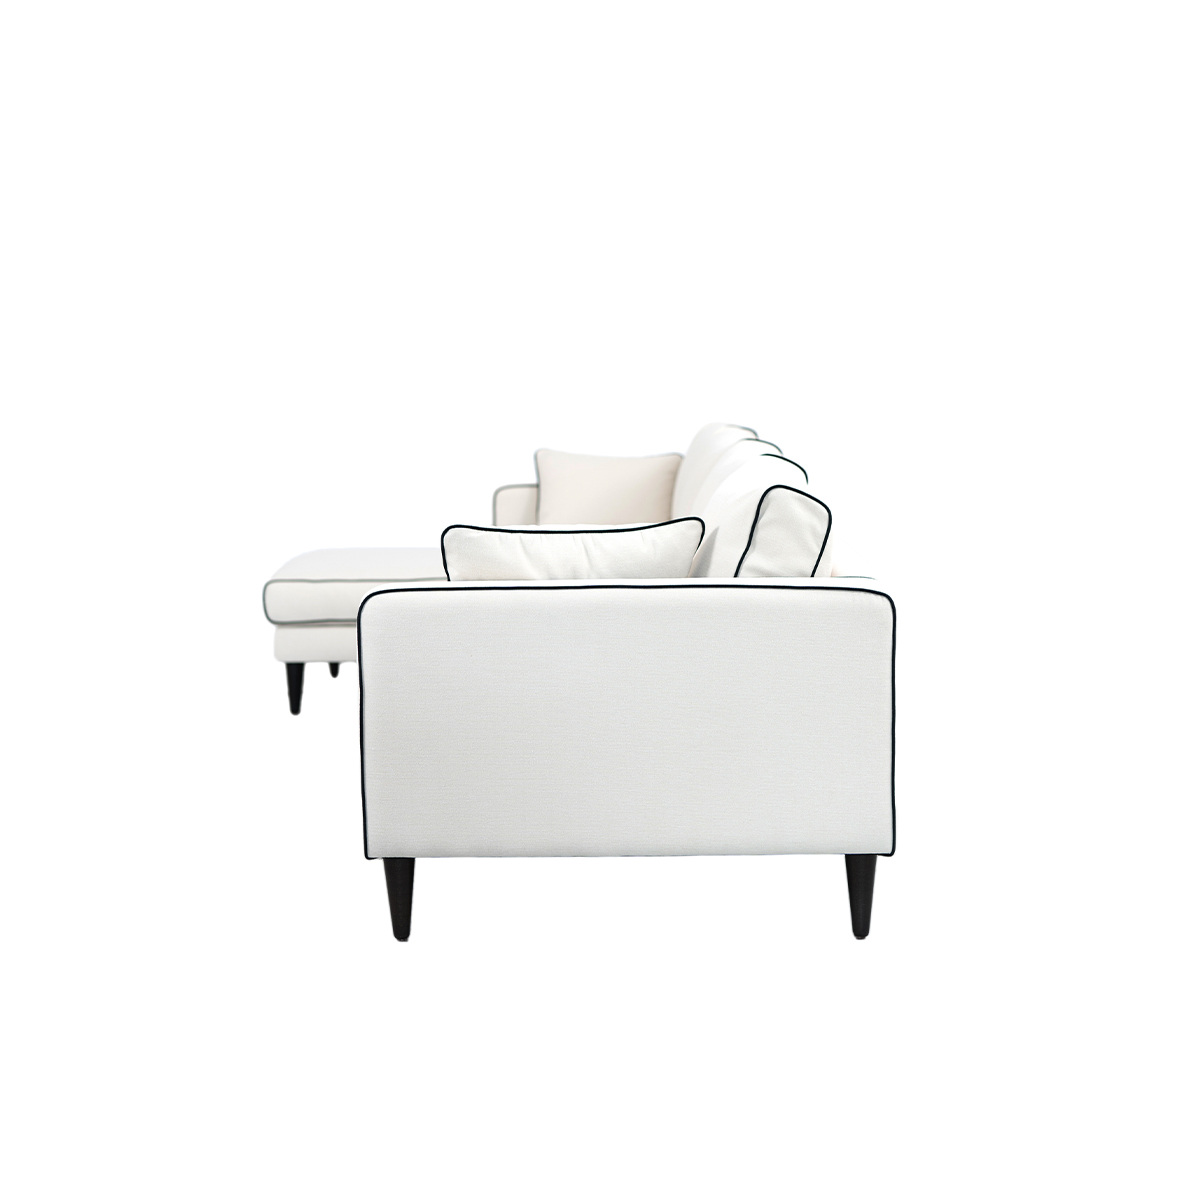 Noa corner sofa - Left angle, L230 x P150 x H75 cm - Cotton - image 3